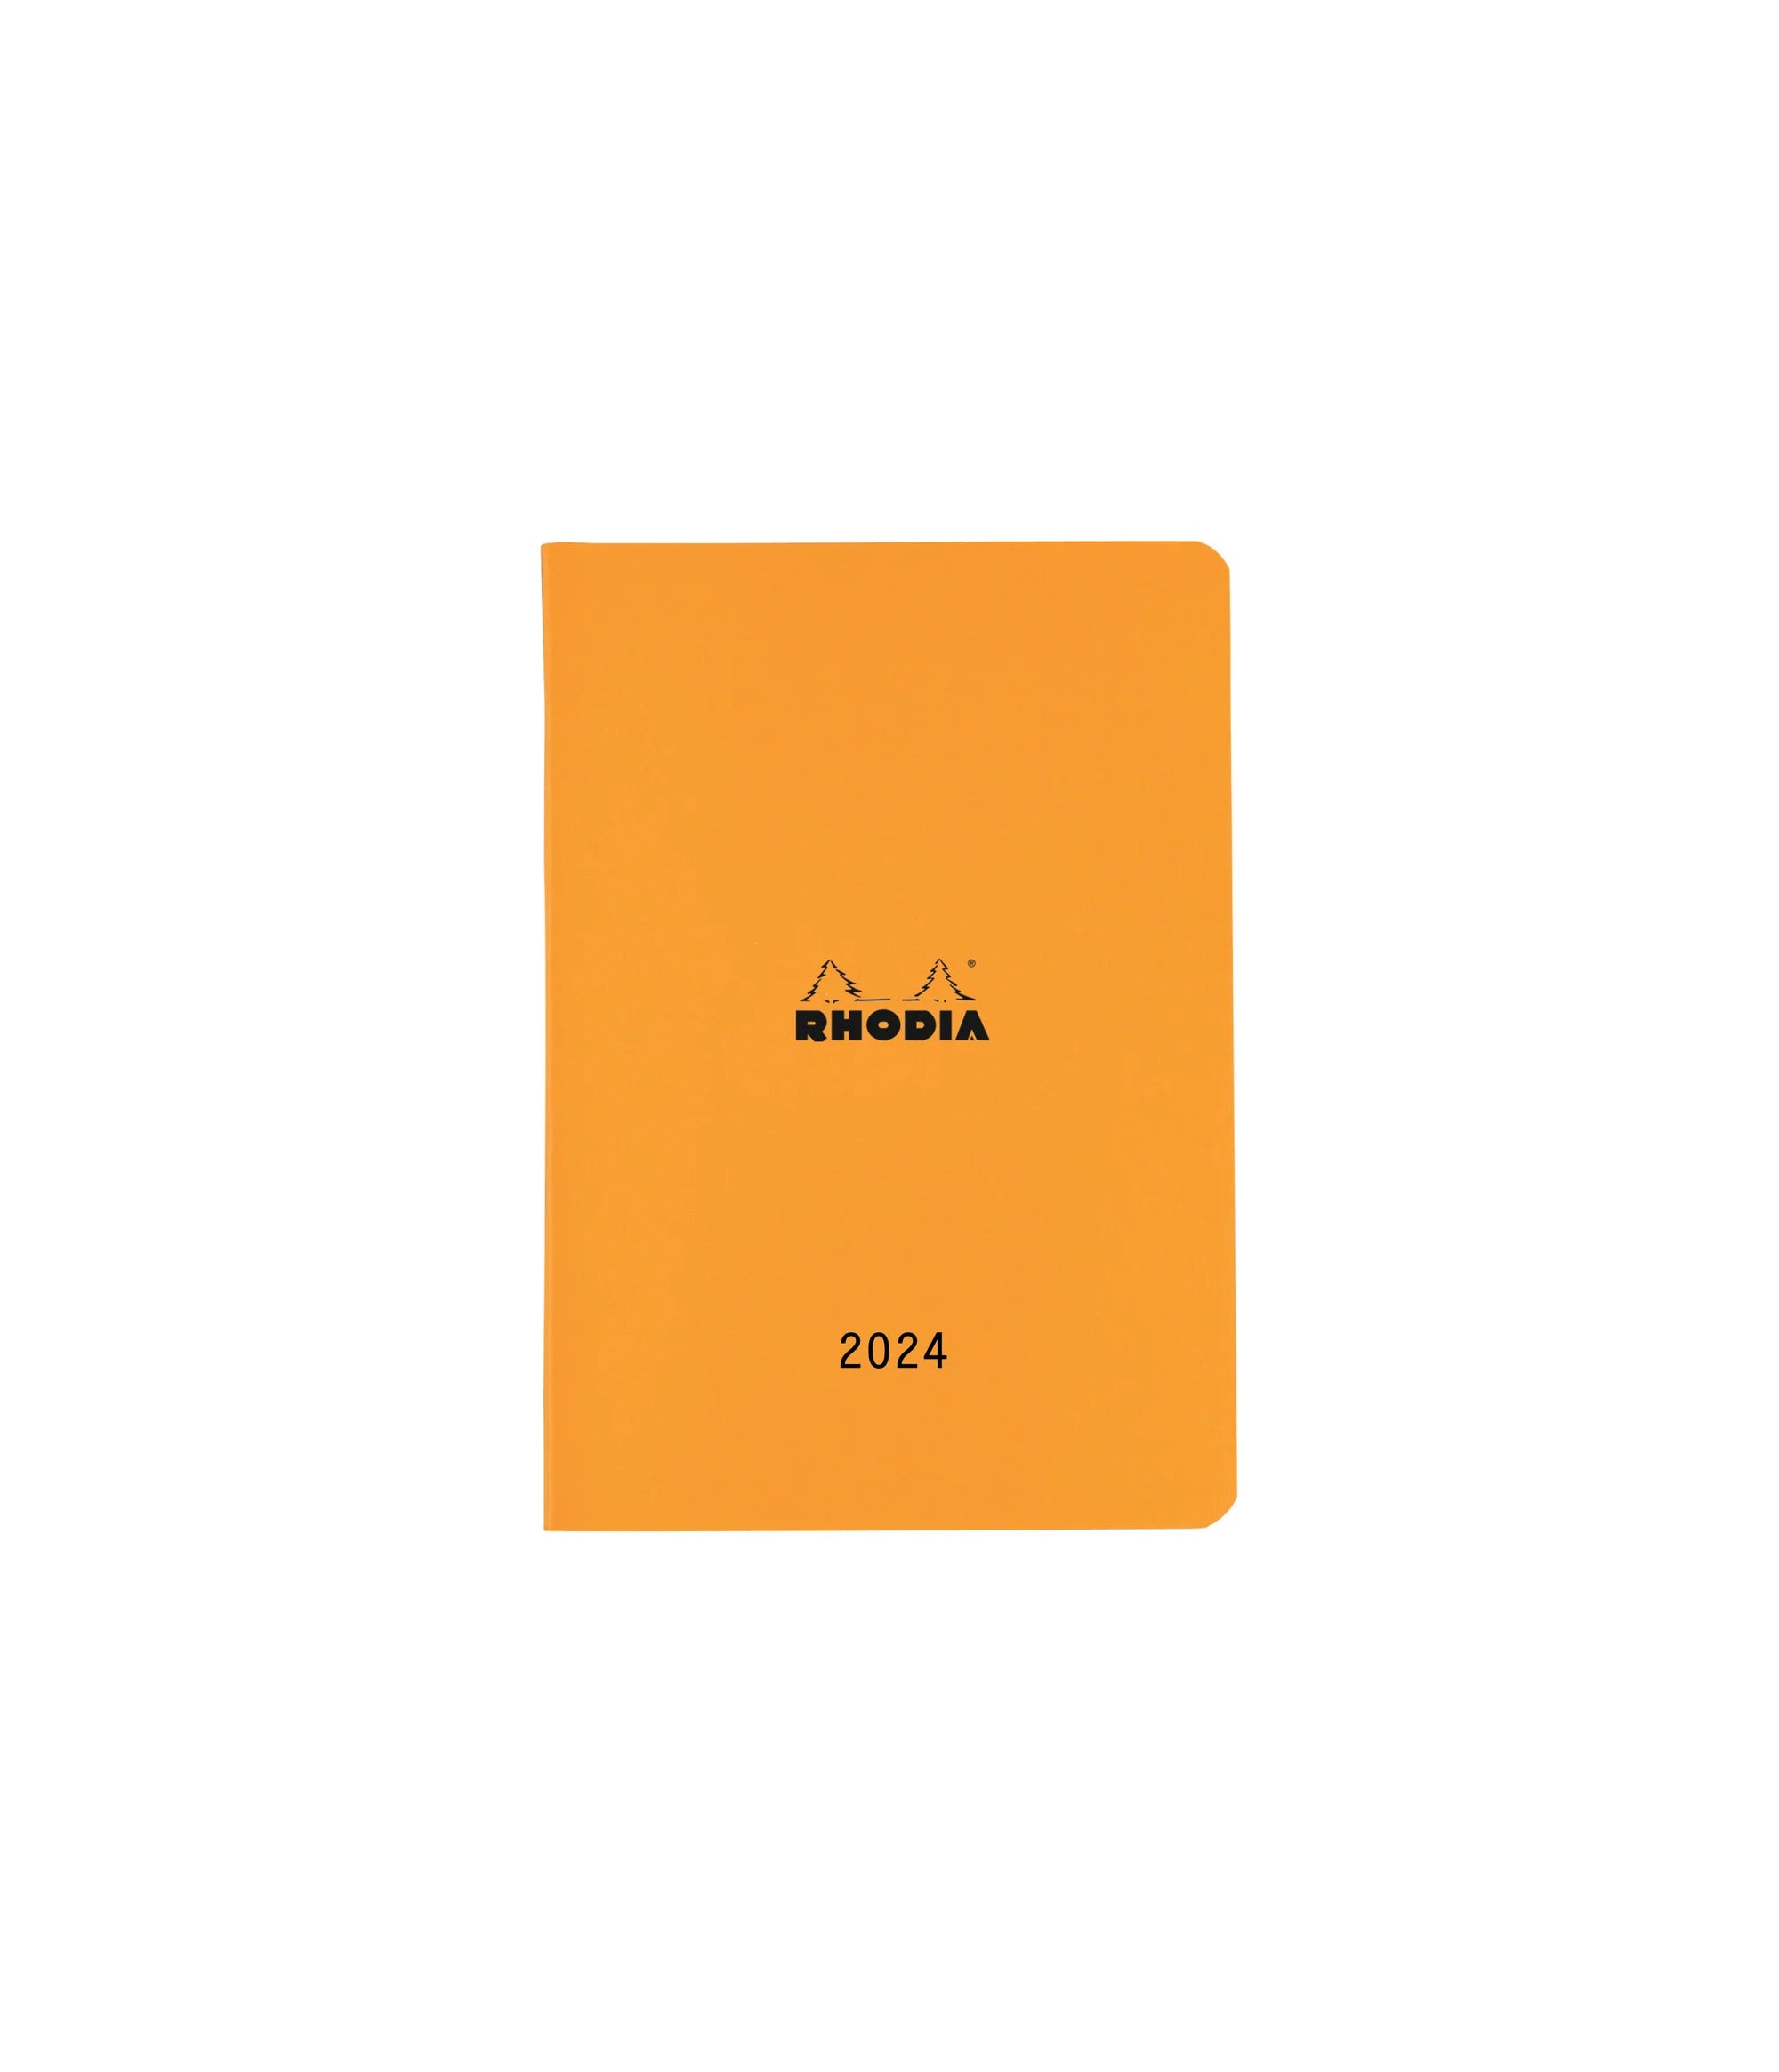 Rhodia 2024 Monthly Planner